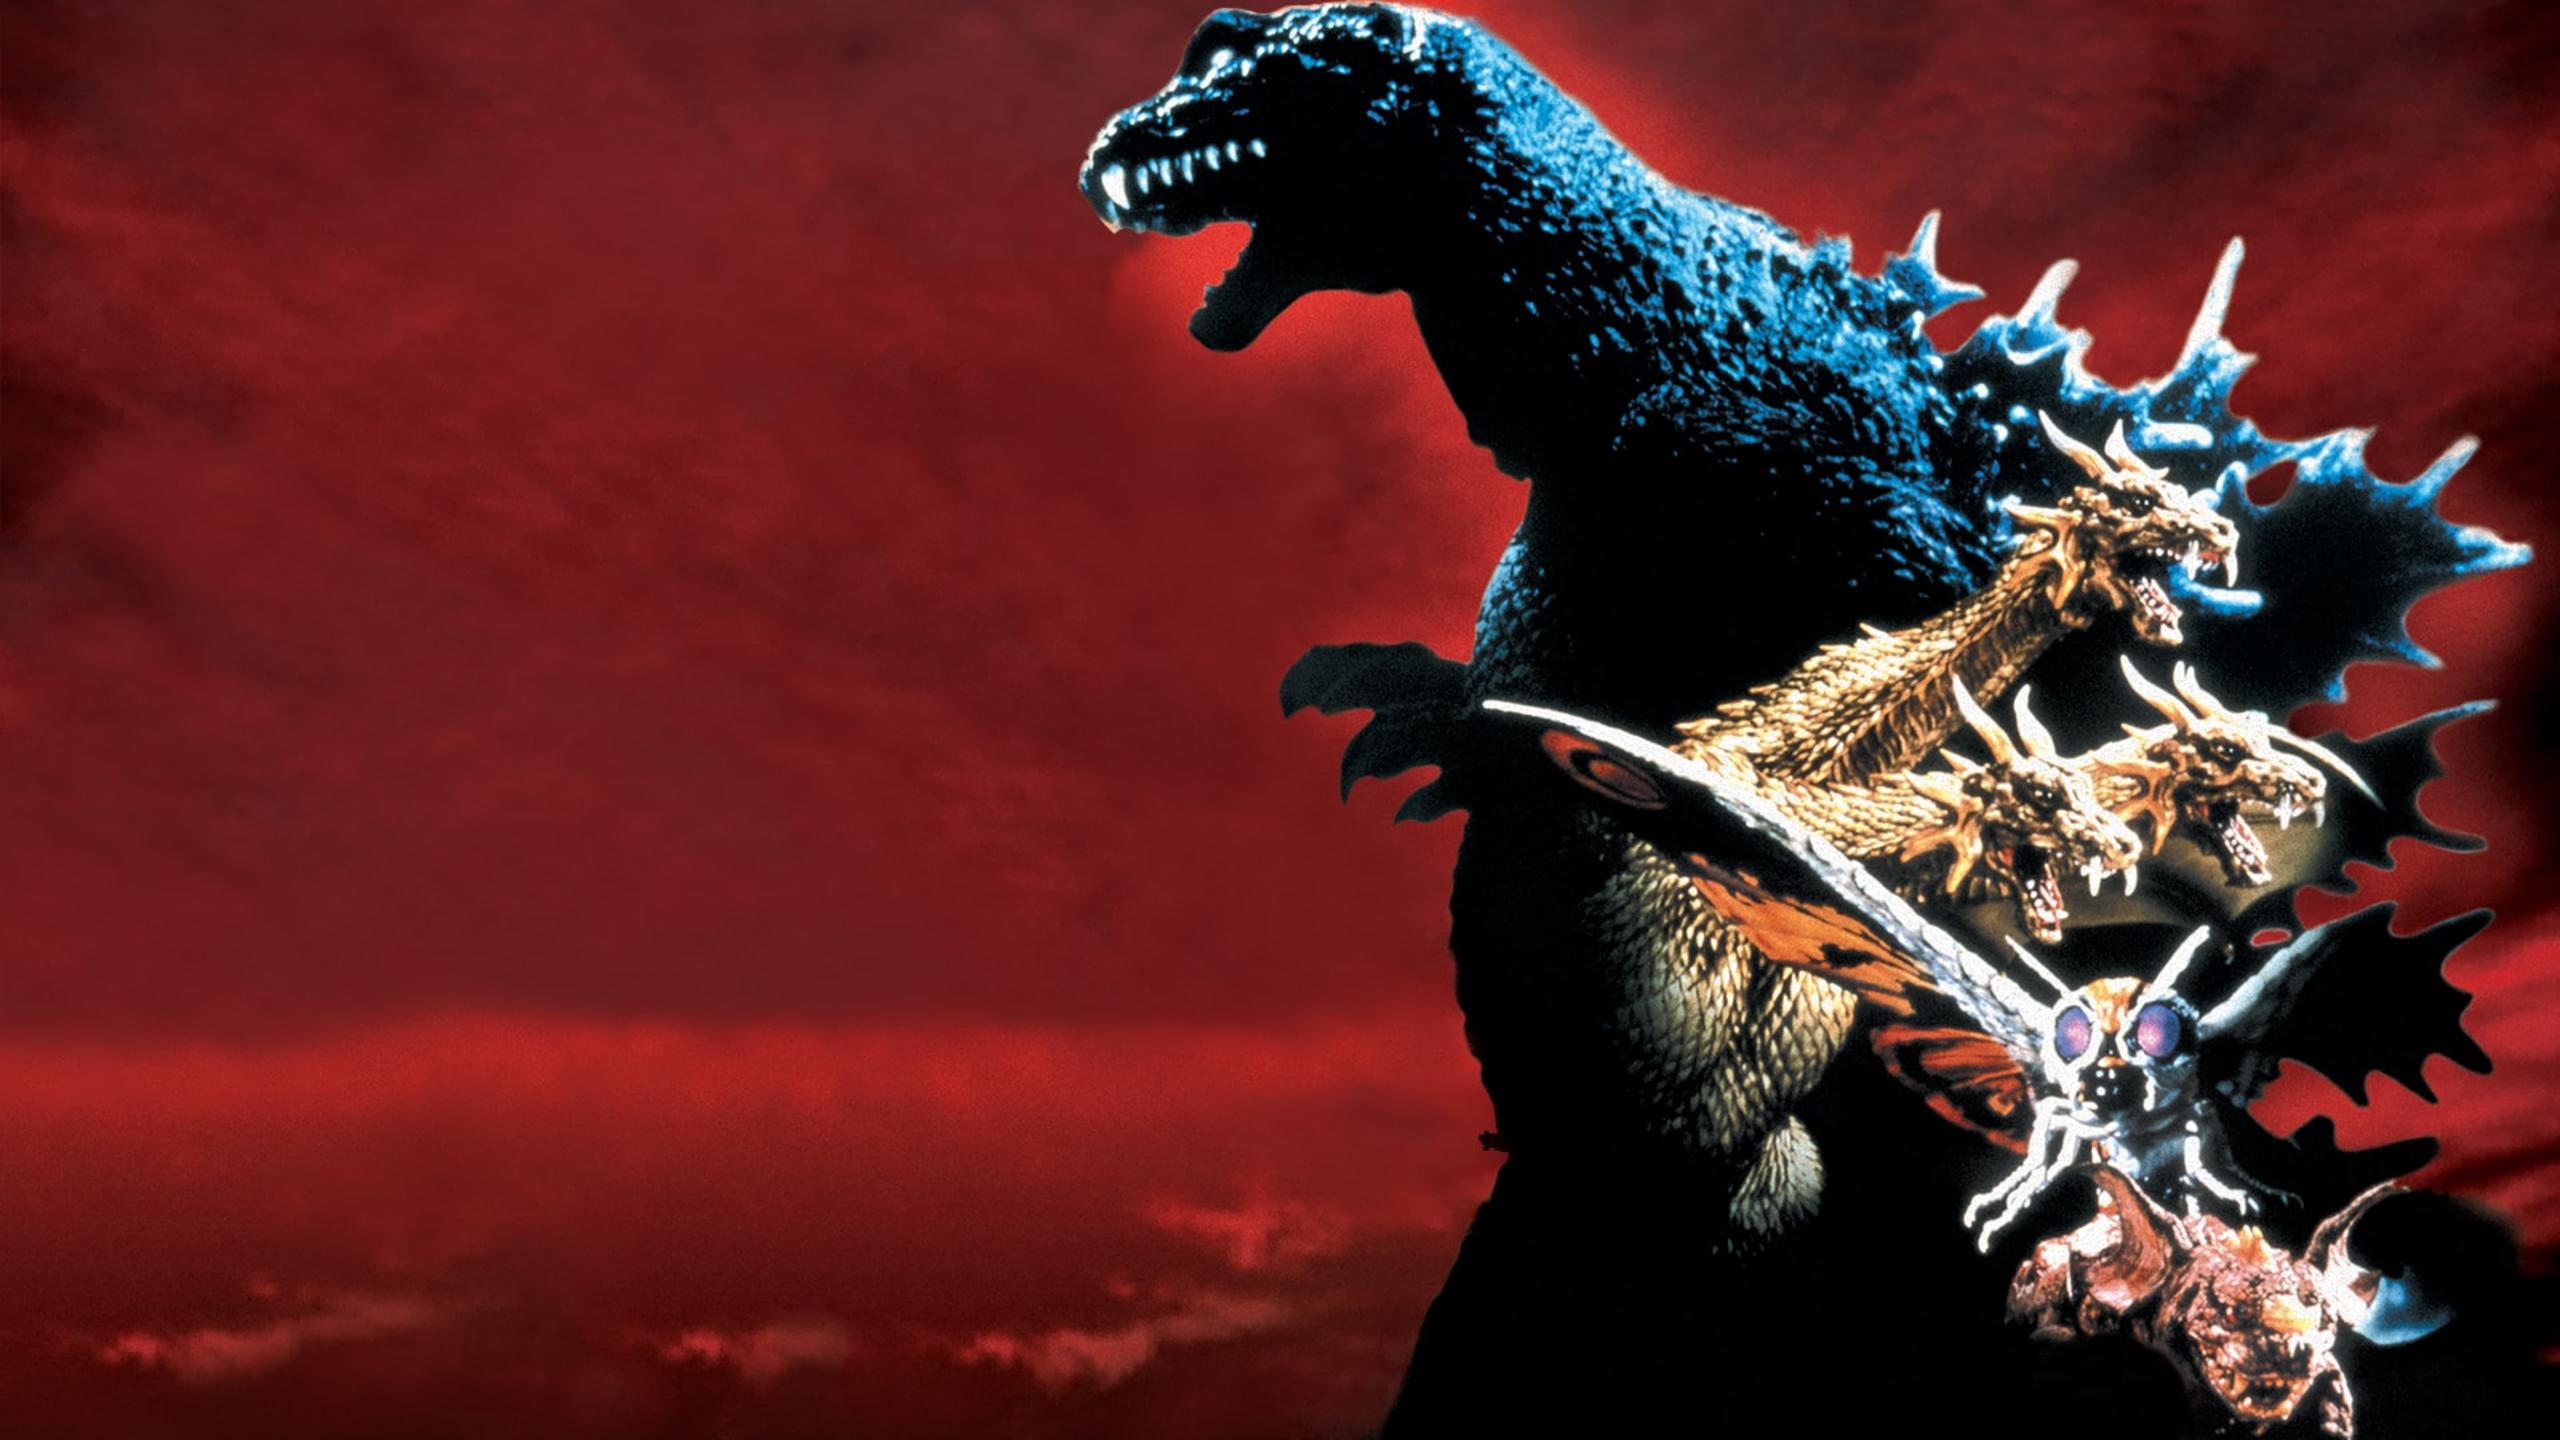 Ipaidforthat. BLM Cool Desktop Wallpaper Worthy Background Of A Few Godzilla Movies On Hulu